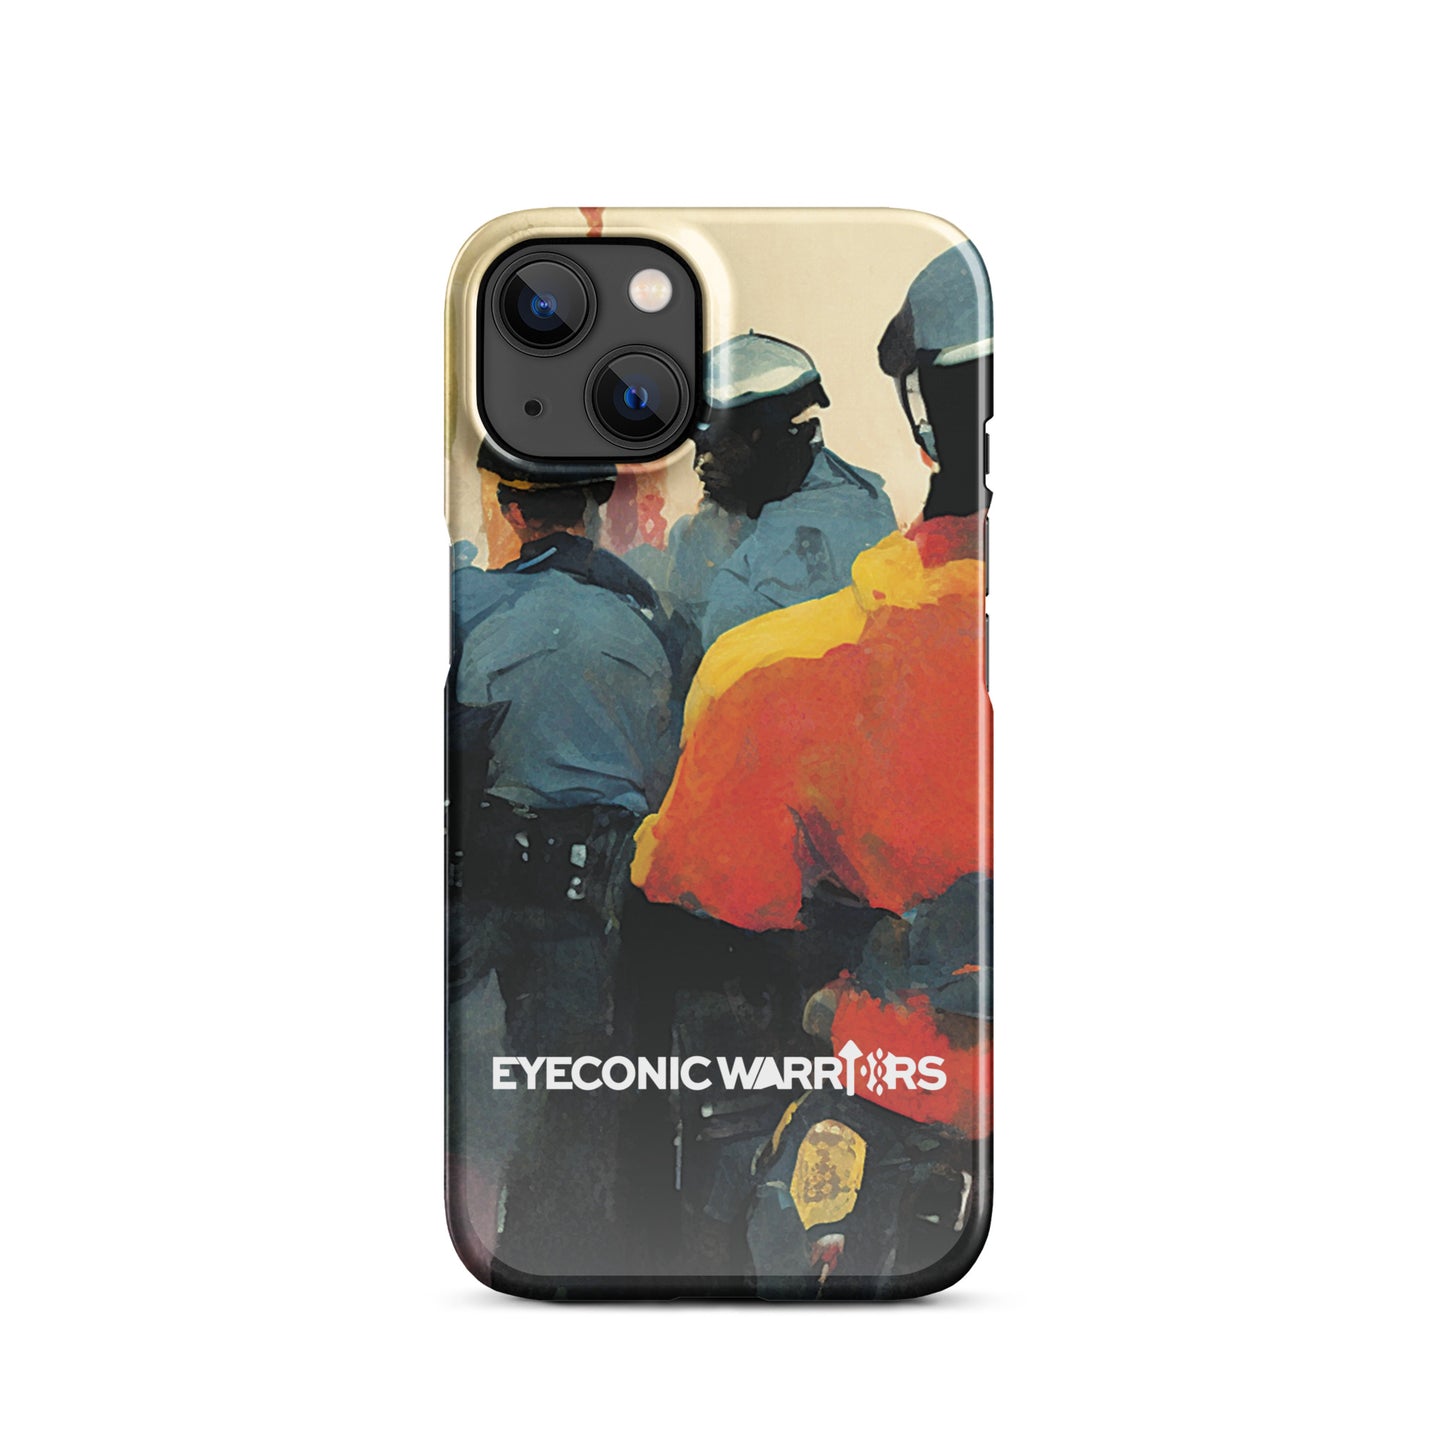 Police Brutality Awareness Custom iPhone Case - Art for Change